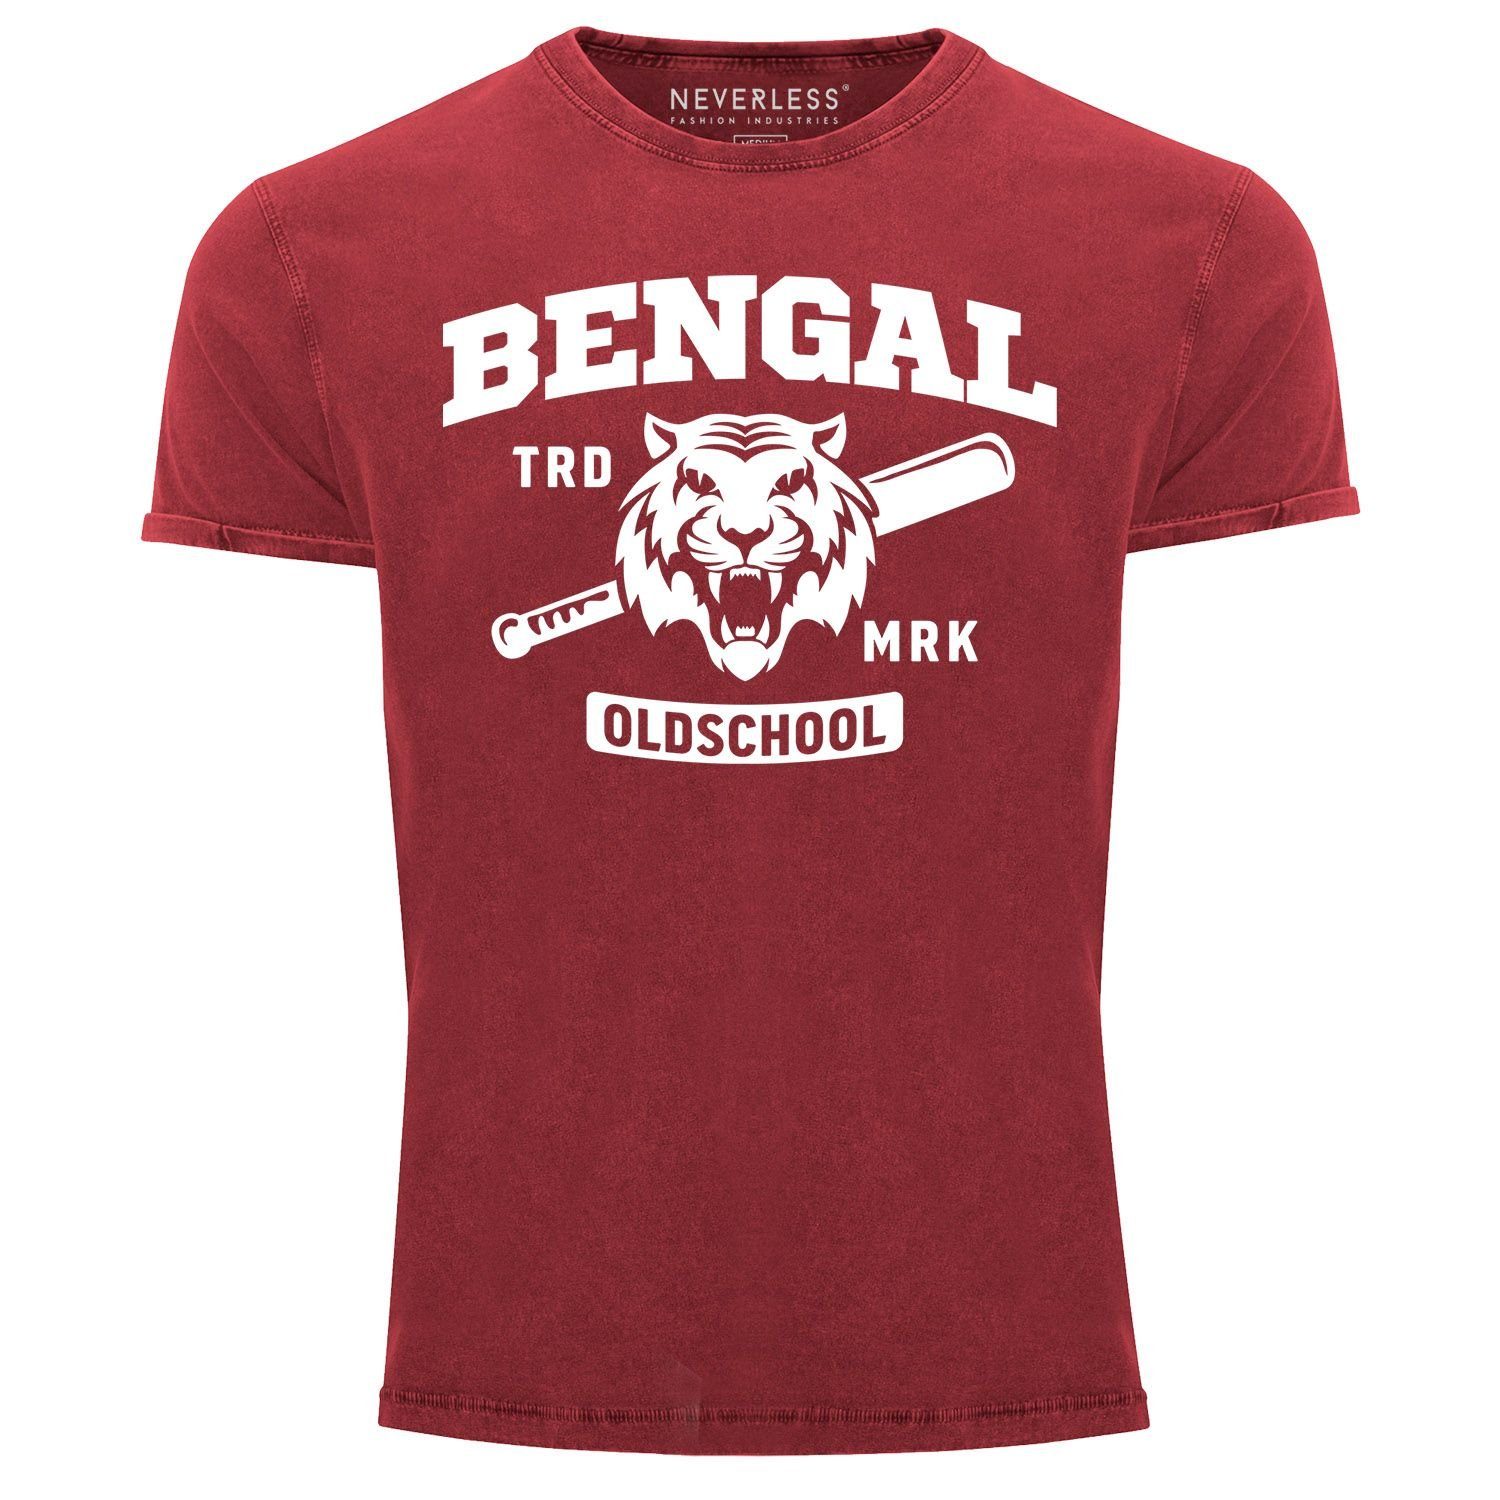 Neverless Print-Shirt Herren Vintage Shirt Bengal Tiger Baseball Sport USA Printshirt T-Shirt Aufdruck Used Look Slim Fit Neverless® mit Print rot